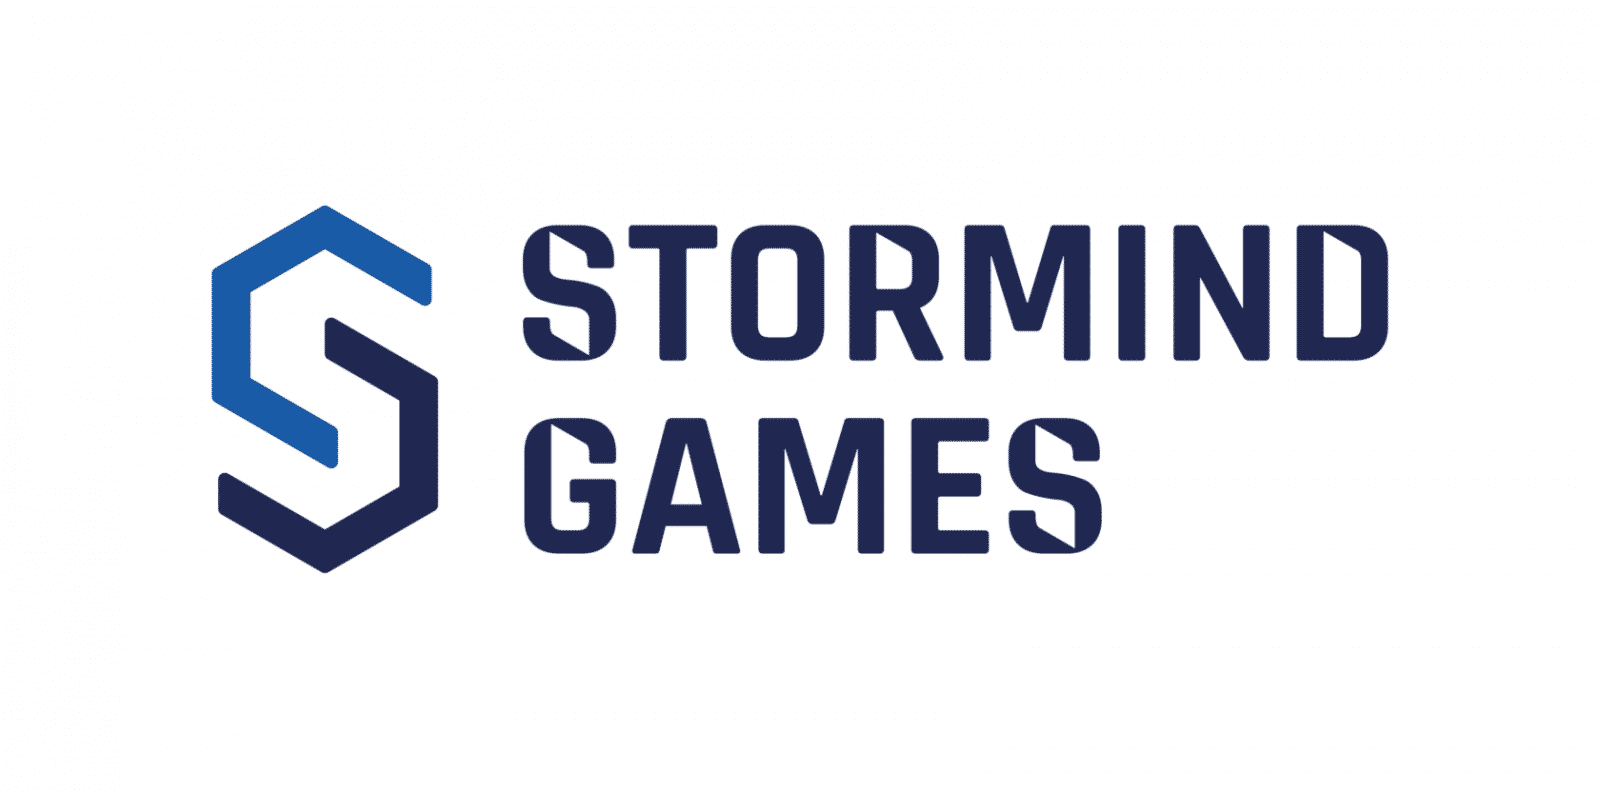 stormind games logo